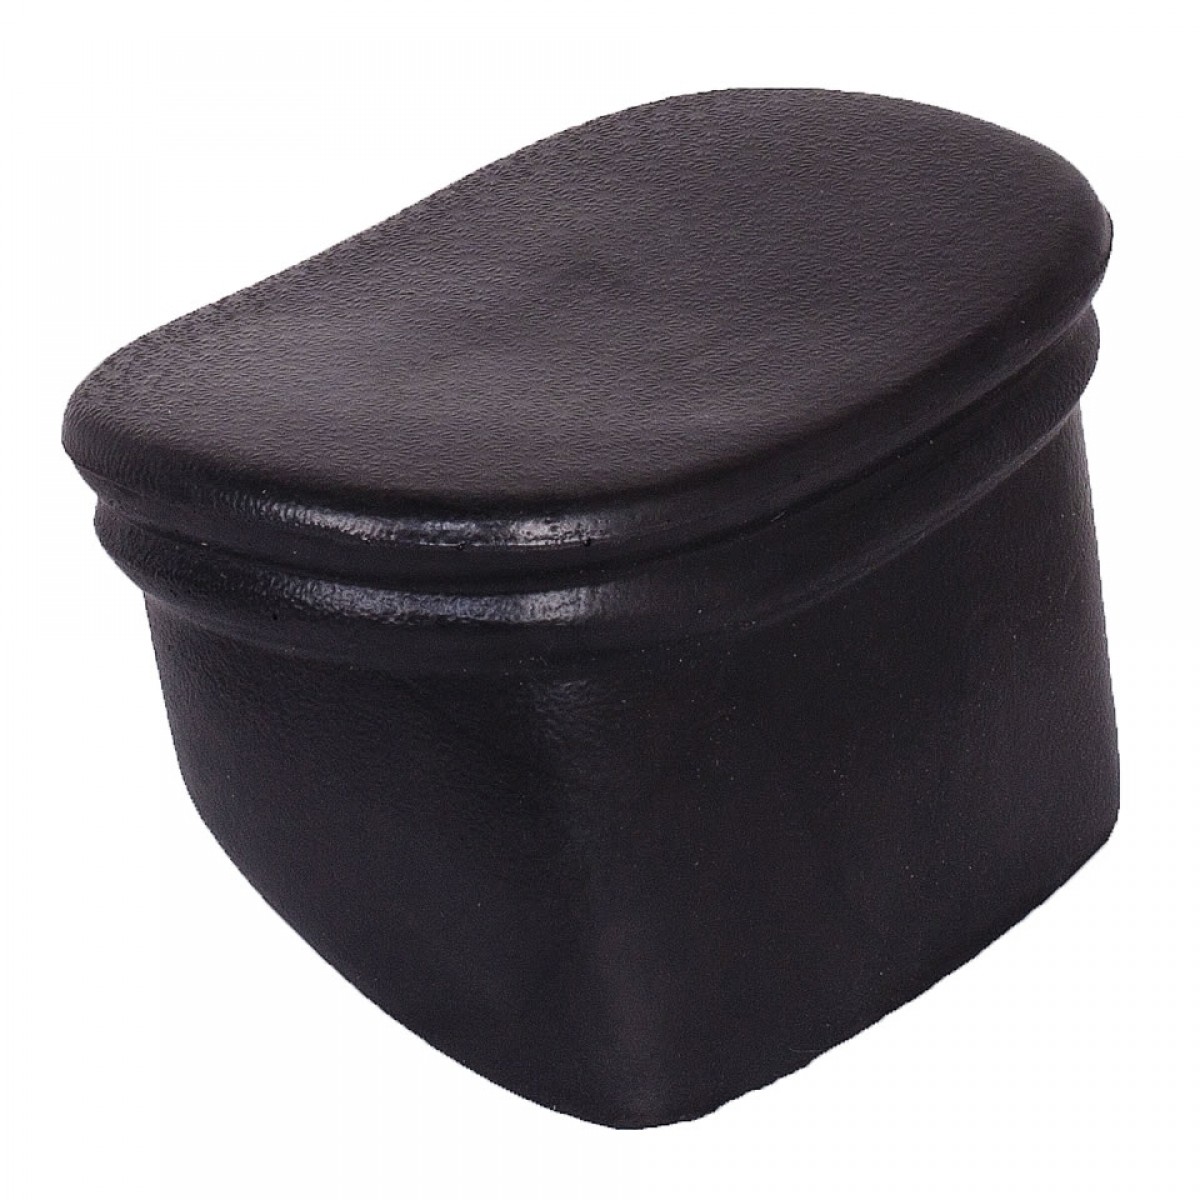 G-107 Headrest for Stationary Shampoo Bowl